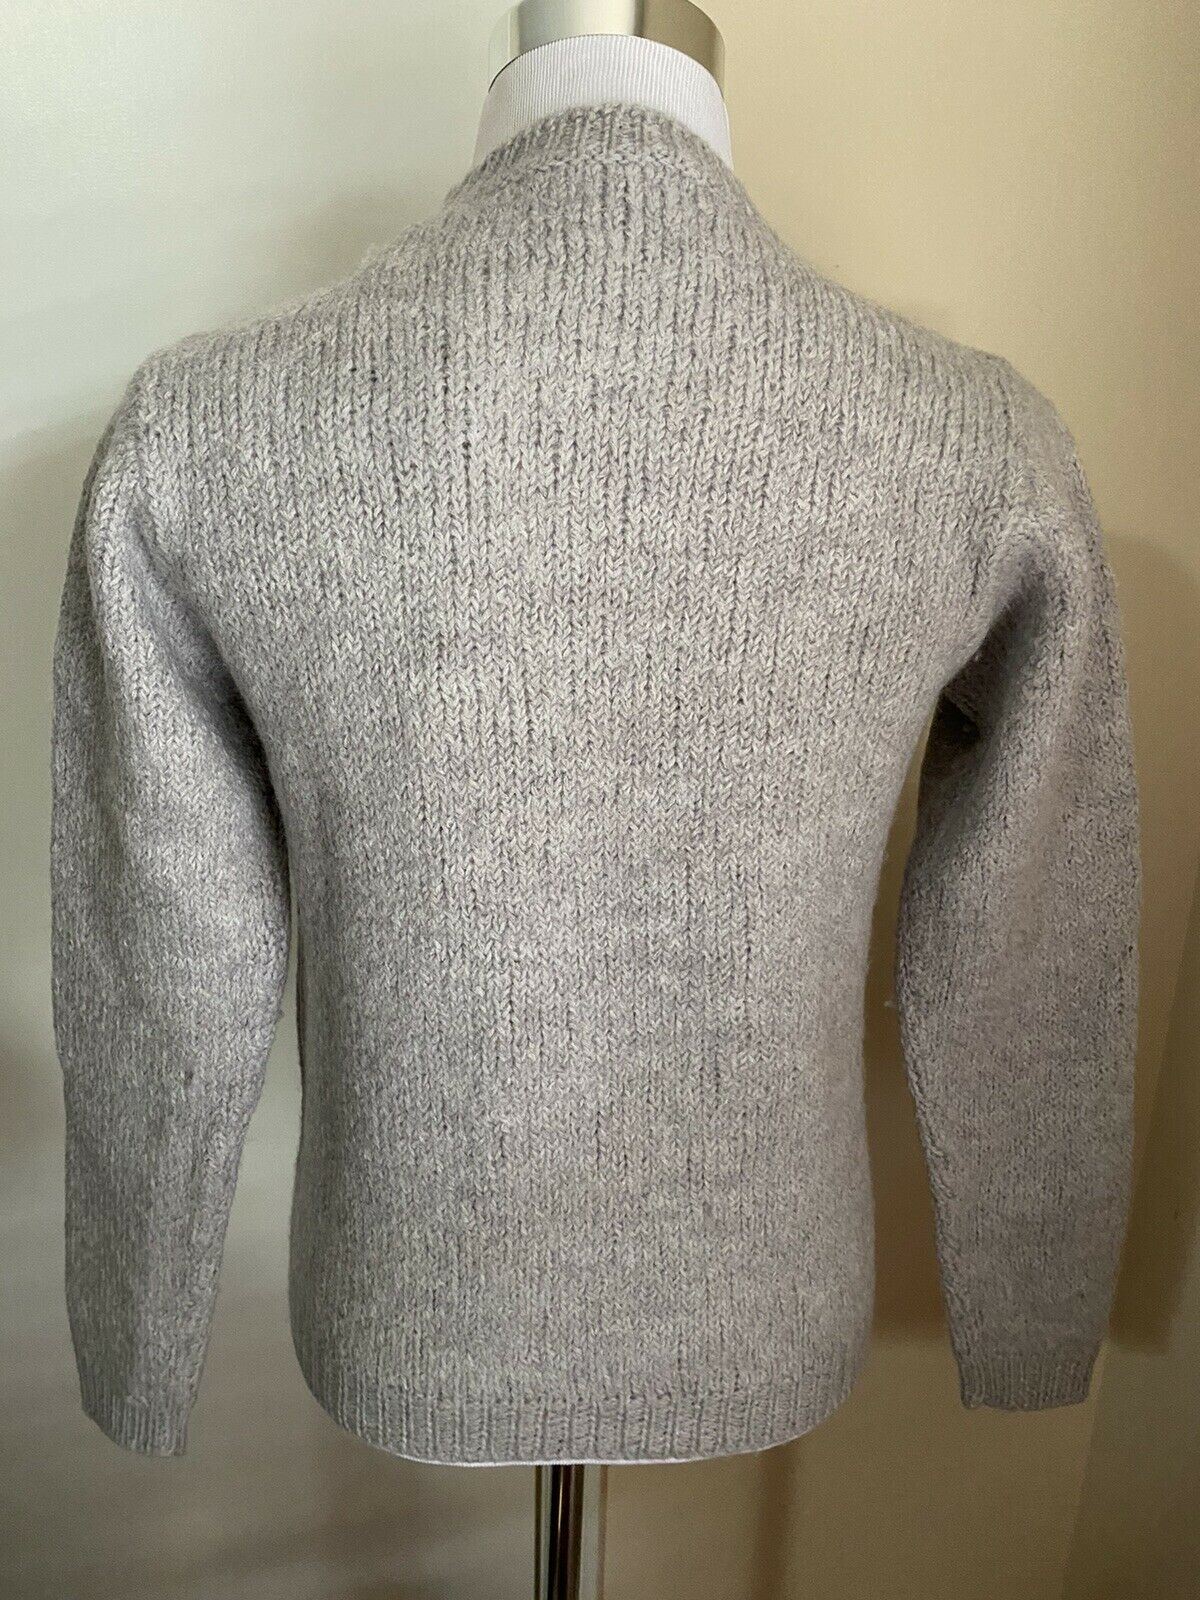 NWT $1600 Gucci Men Wool Crewneck Sweater Light Gray S Italy